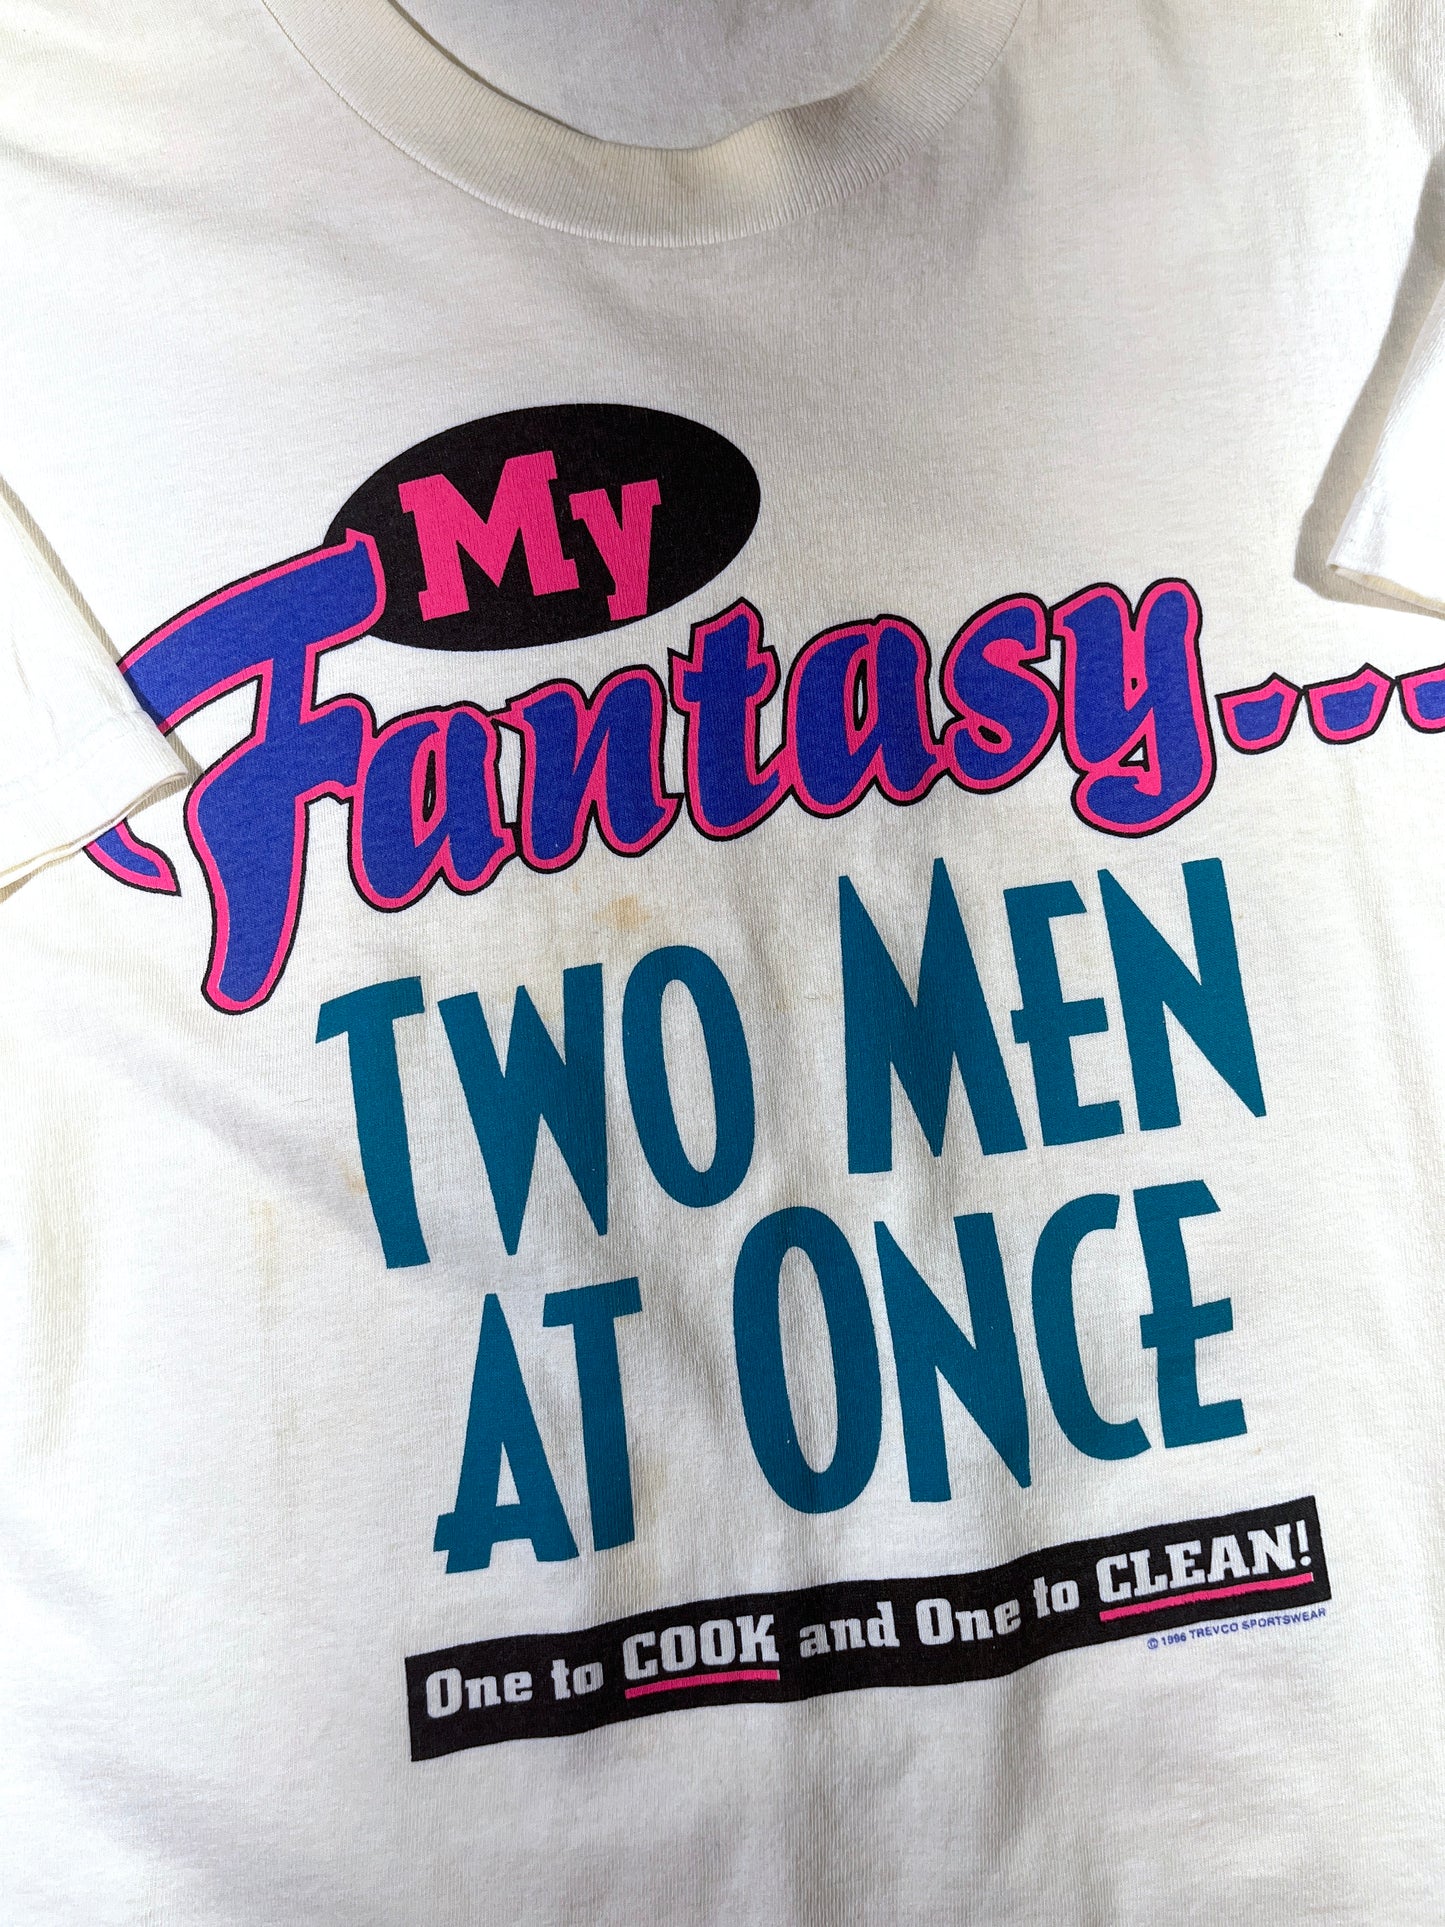 Vintage Fantasy T-Shirt Two Men At Once Funny Slogan